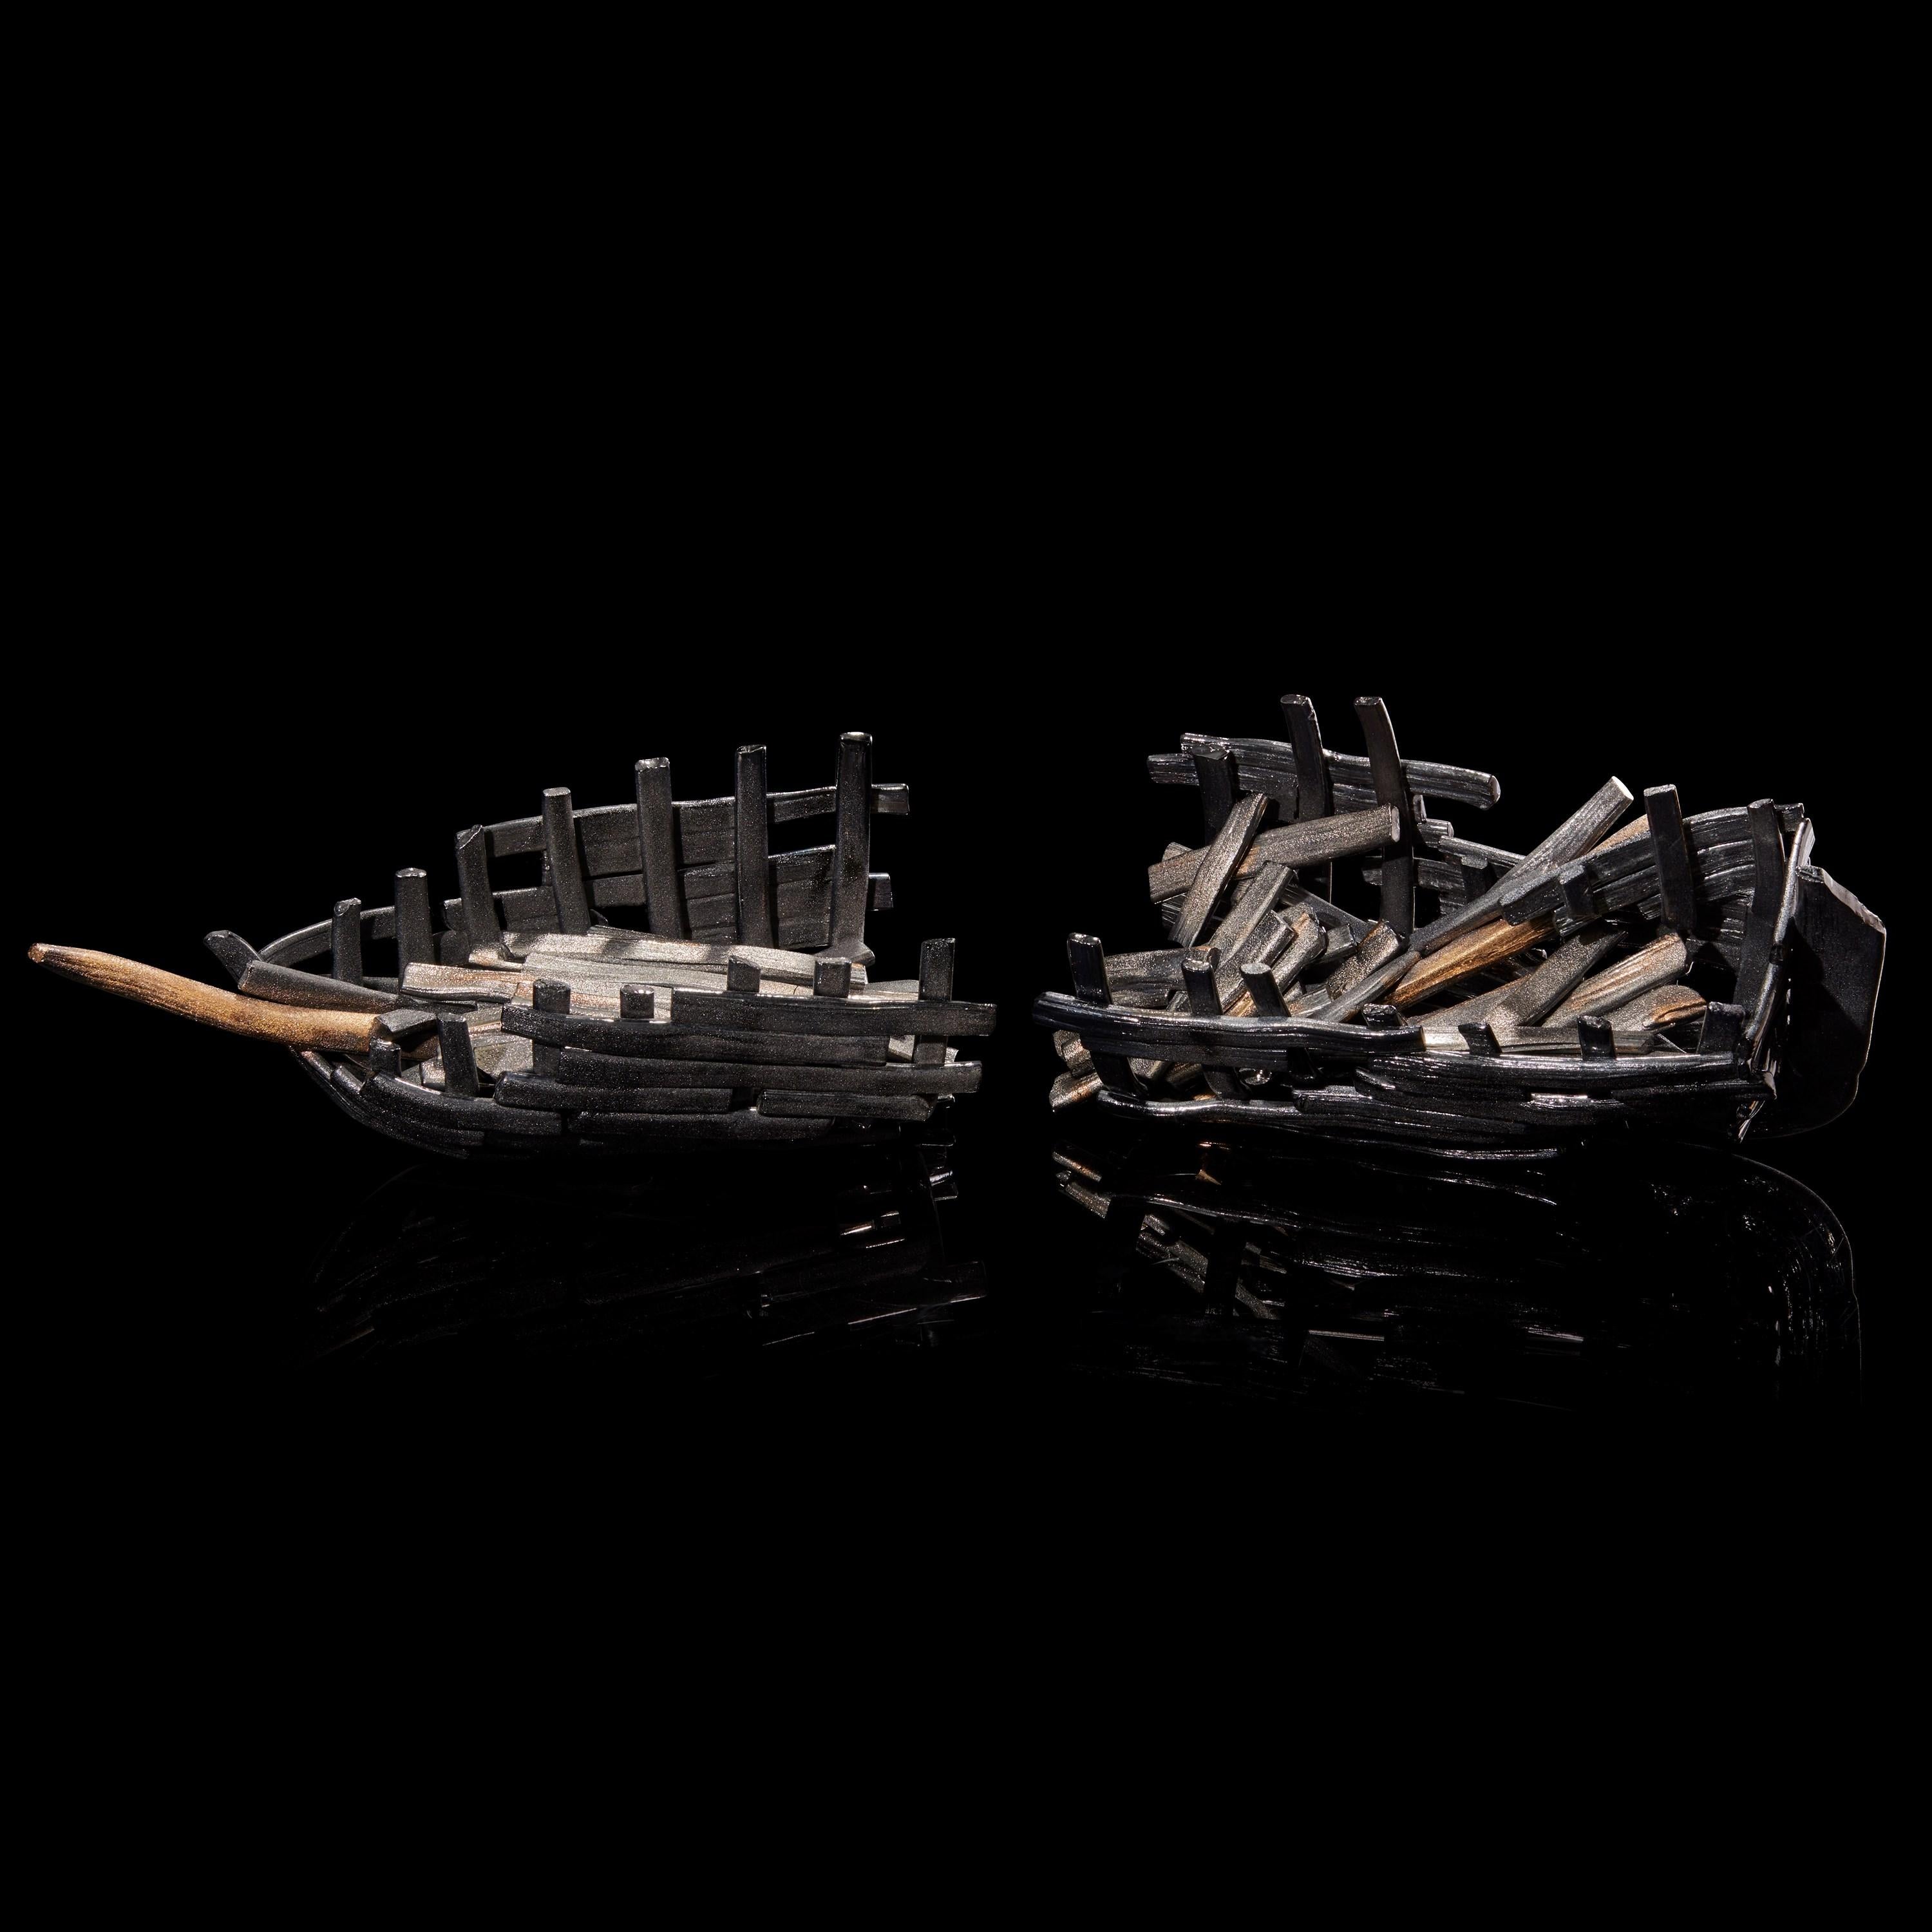 Wreck 2401-1GB, black glass shipwreck sculpture by James Devereux 2